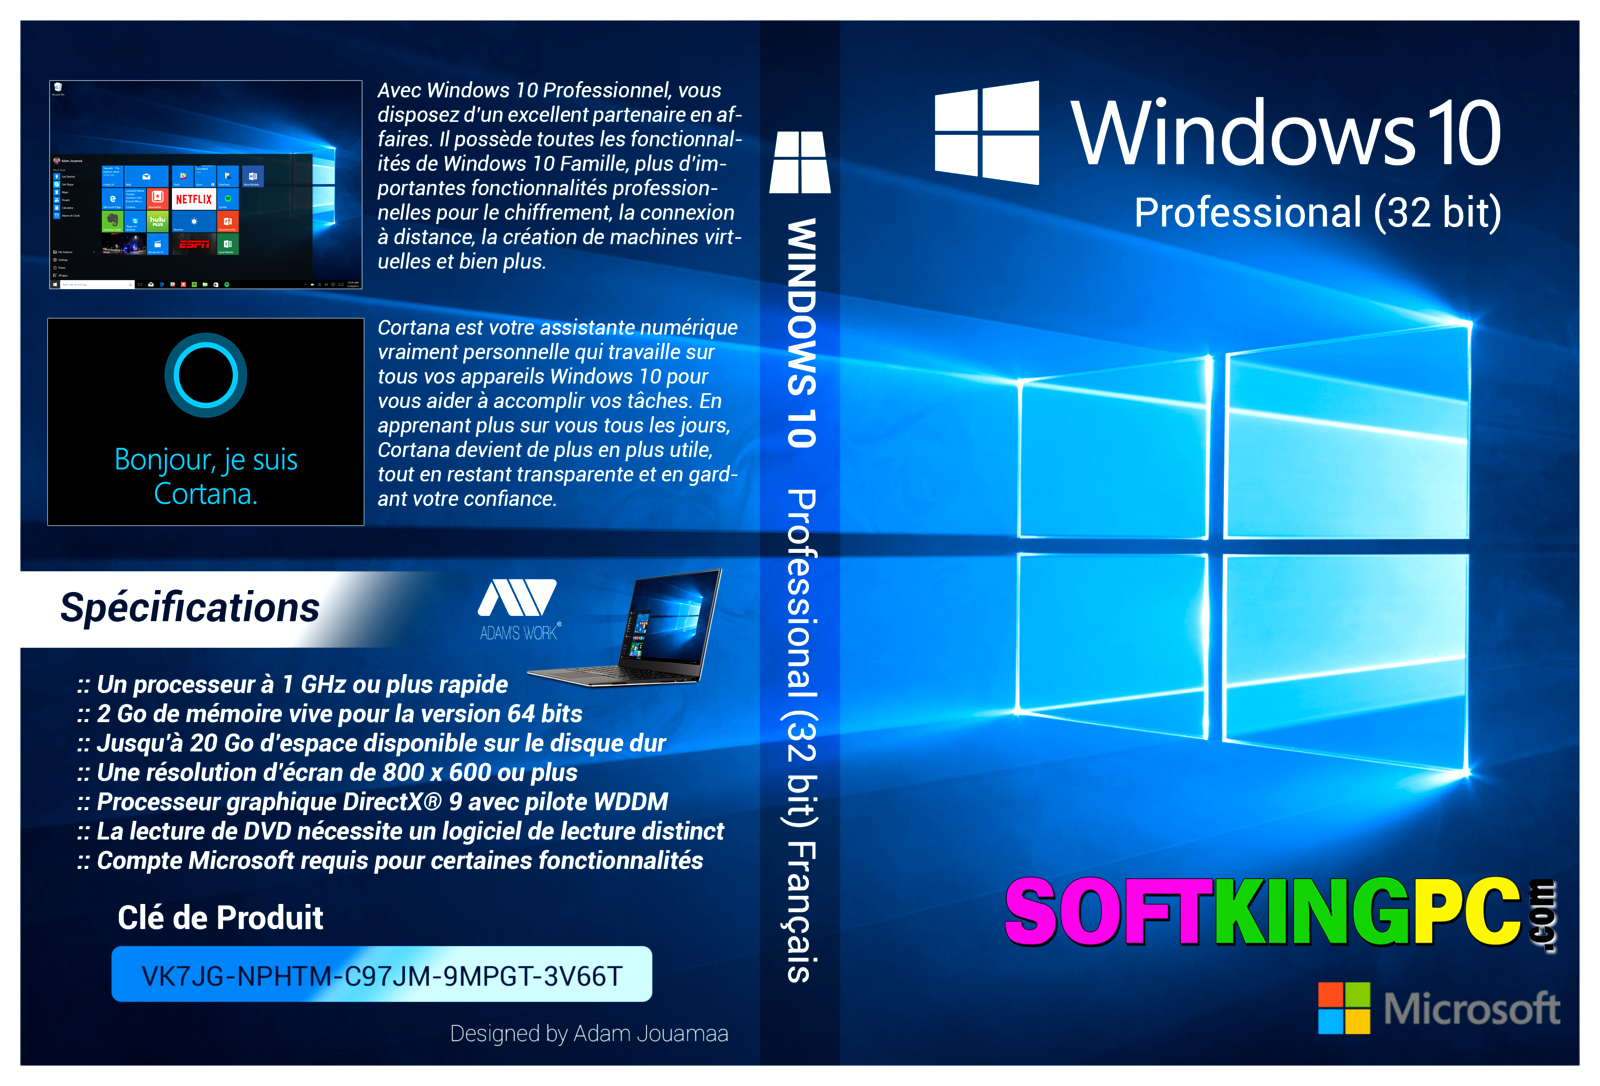 windows 10 pro 32 bit full version download